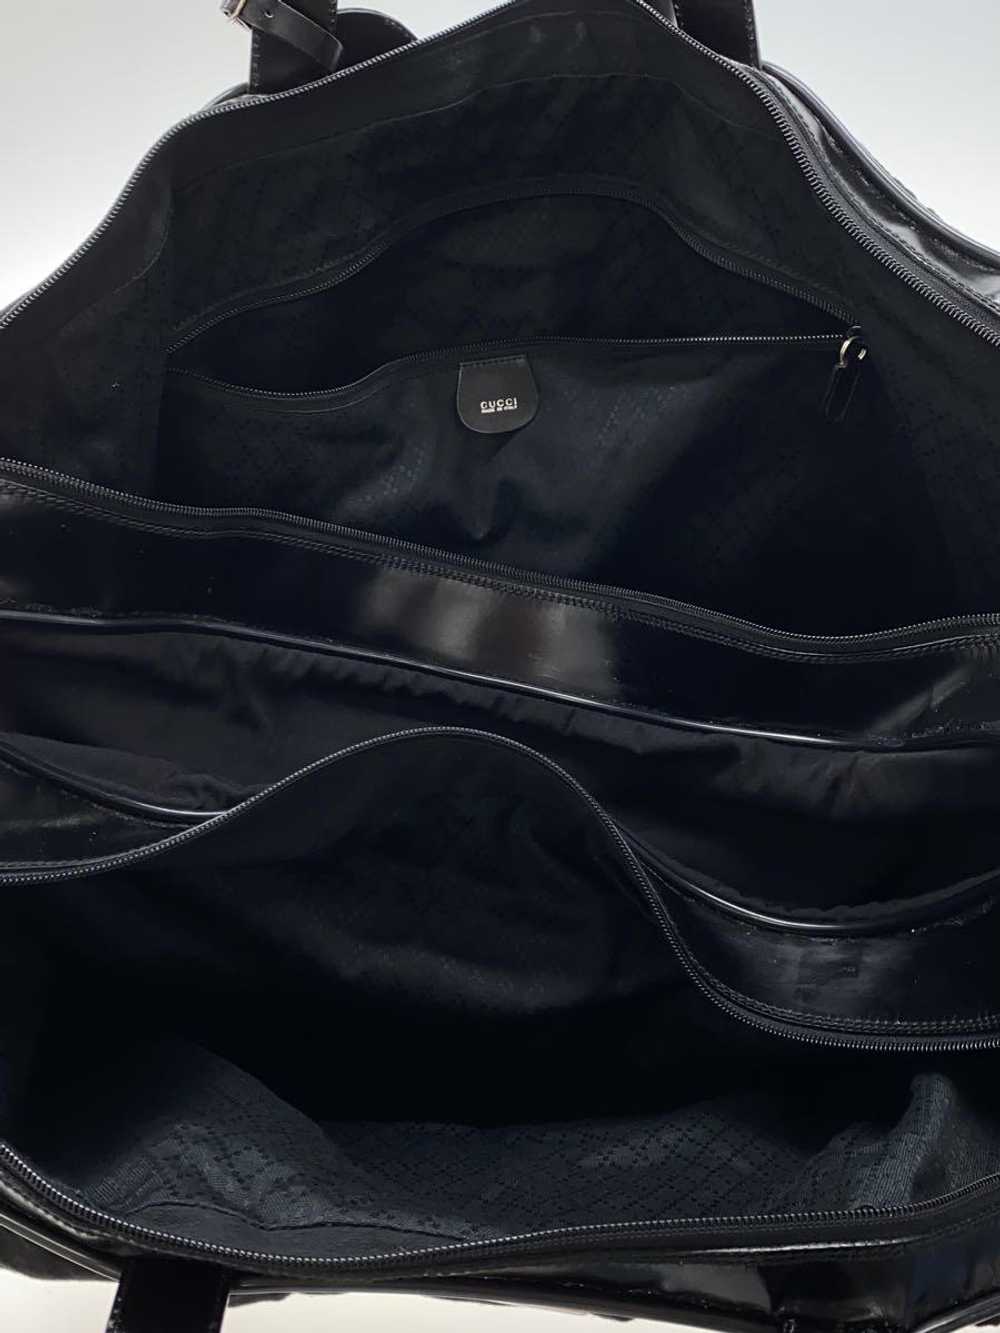 Used Gucci Boston Bag/Leather/Blk Bag - image 6